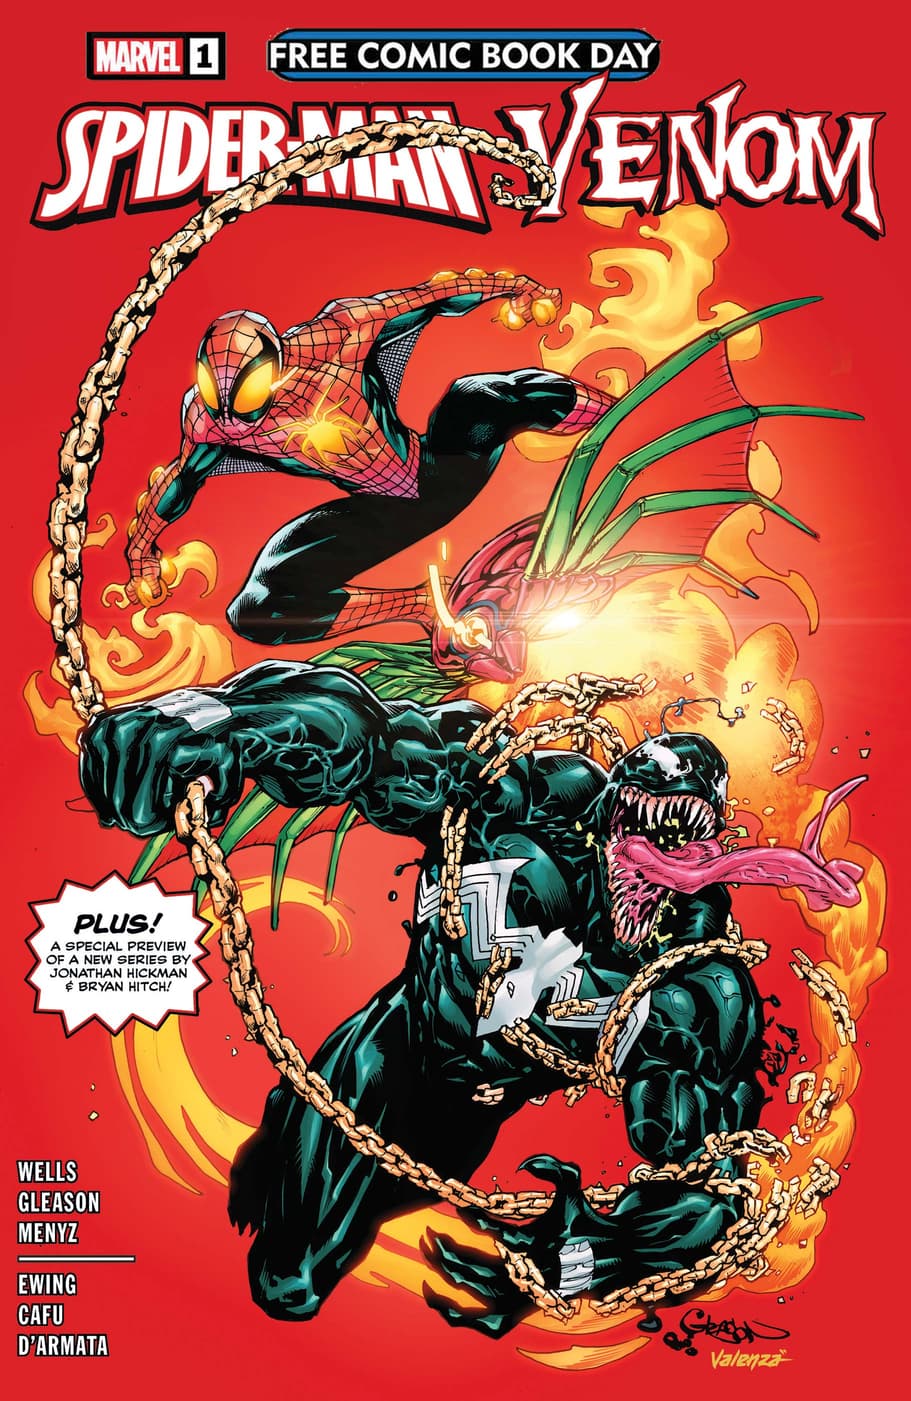 FREE COMIC BOOK DAY 2023: SPIDER-MAN/VENOM #1 cover by Patrick Gleason and Bryan Valenza